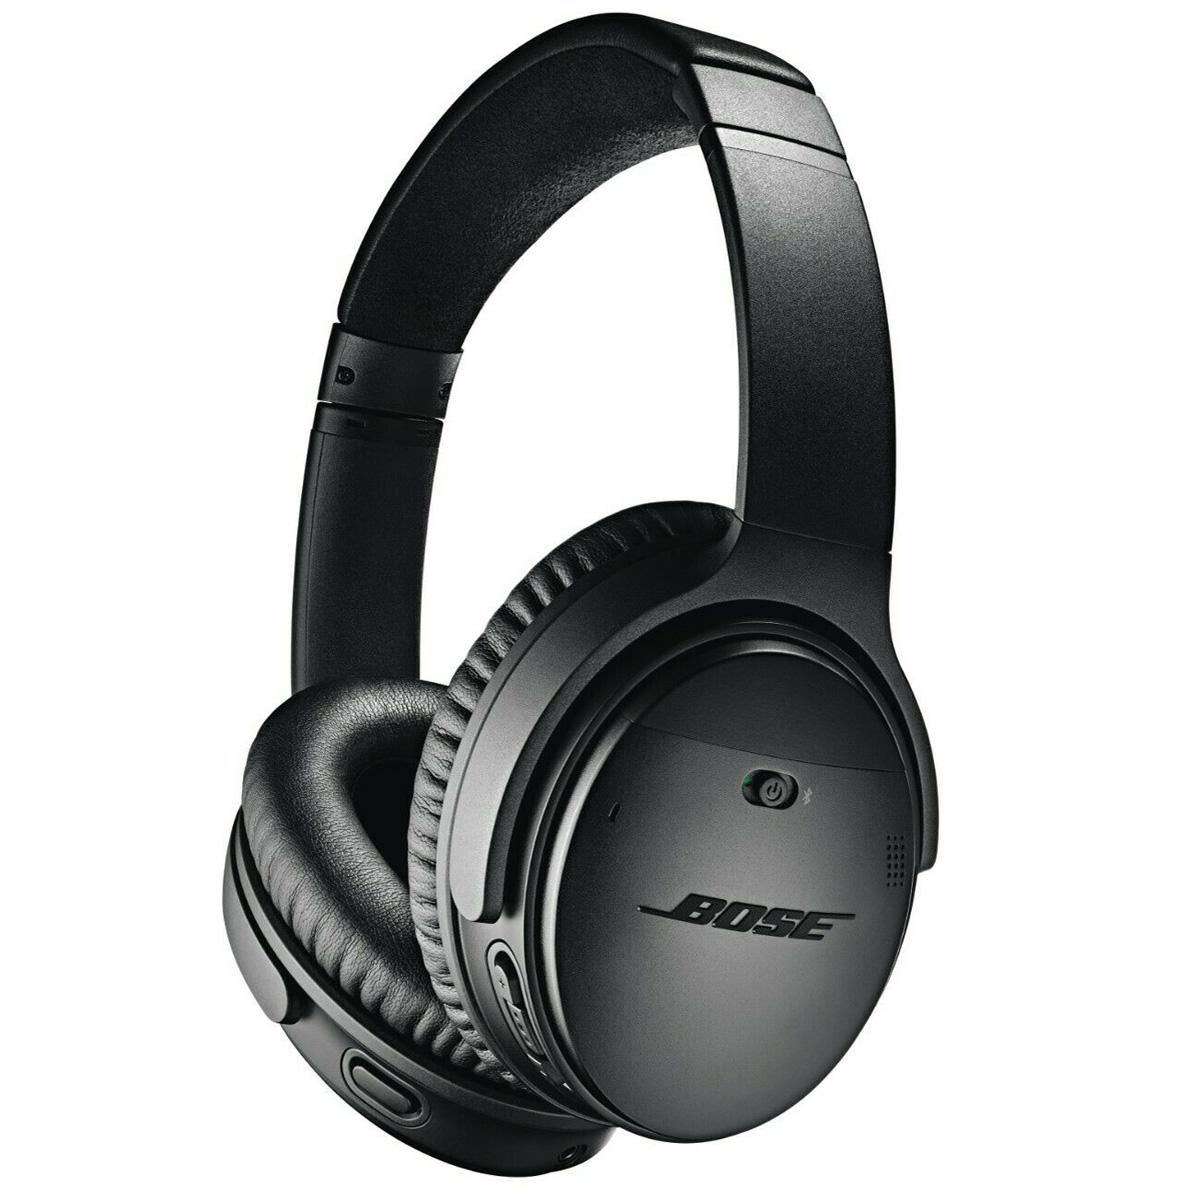 Bose QuietComfort 35 Series II Wireless Headphones for $199 Shipped